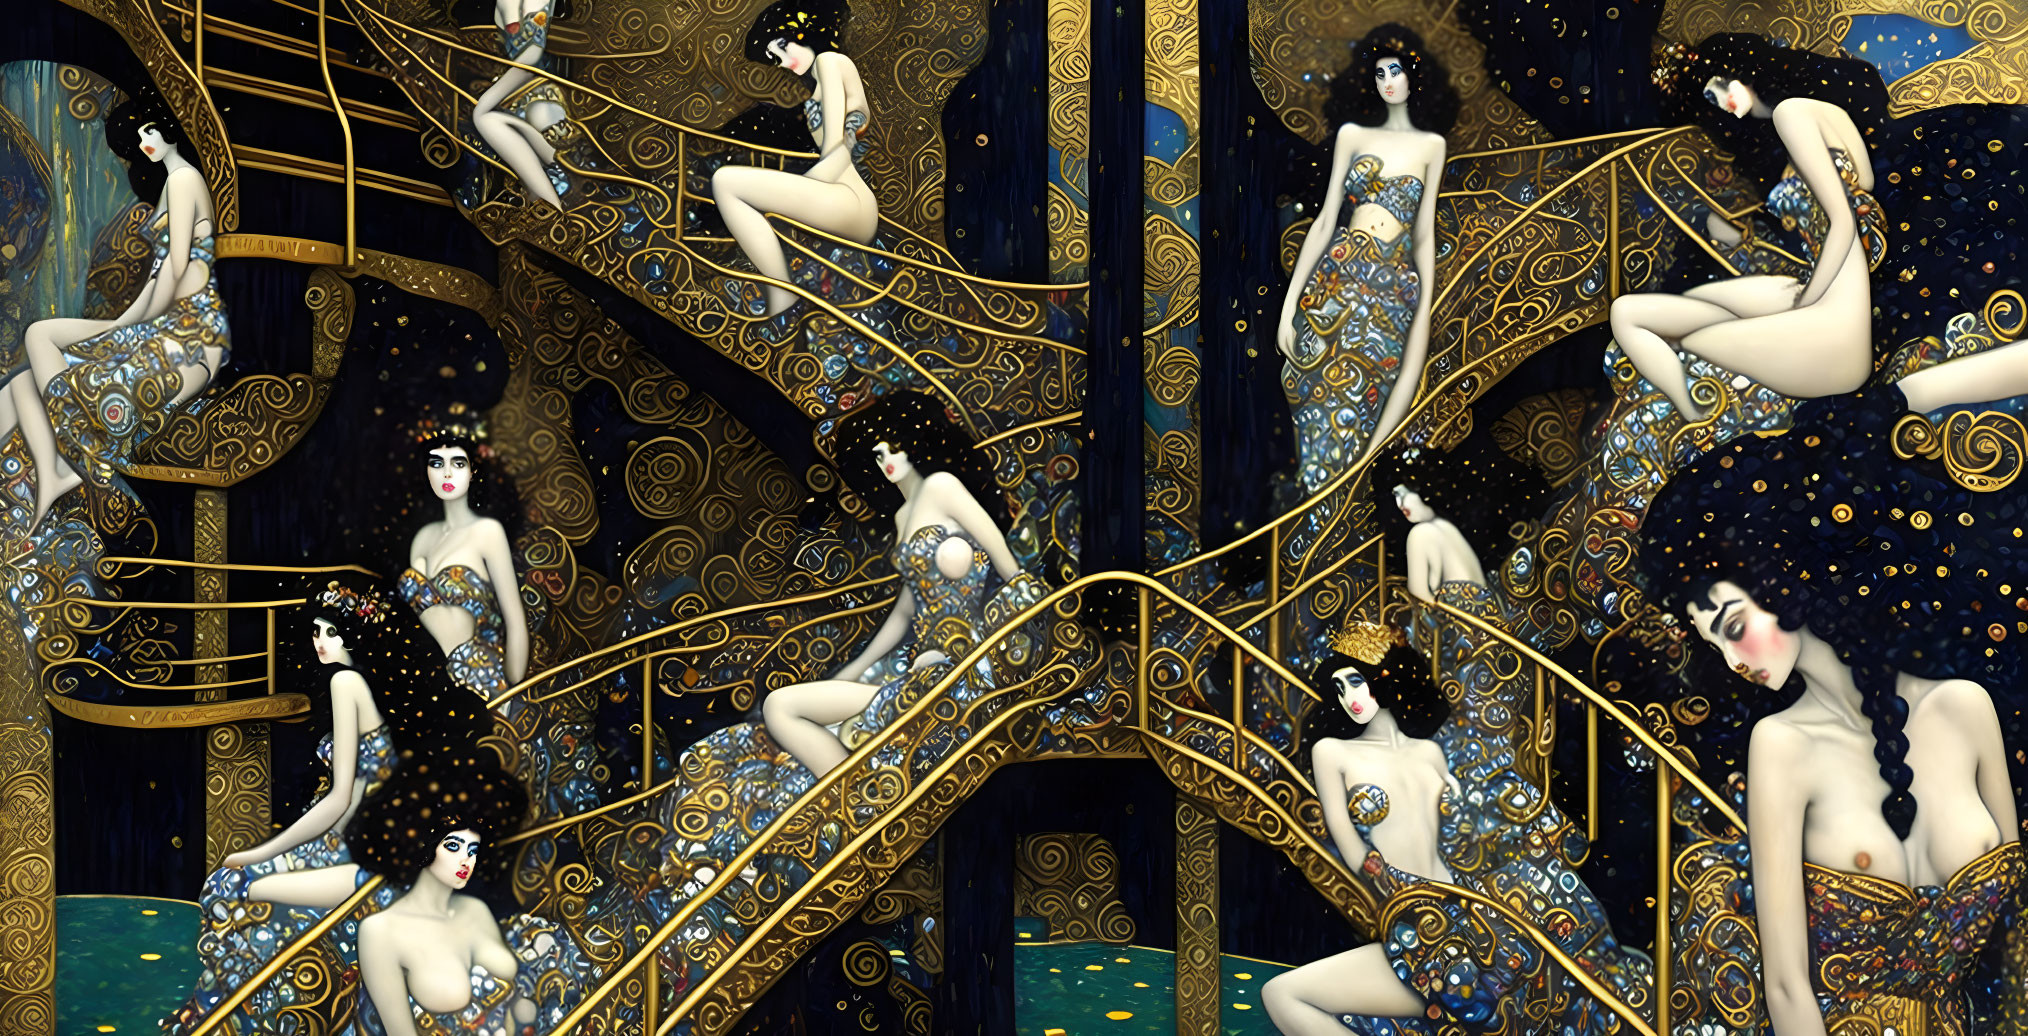 Multiple pale-skinned women with dark hair posed on ornate golden staircase under starry night sky.